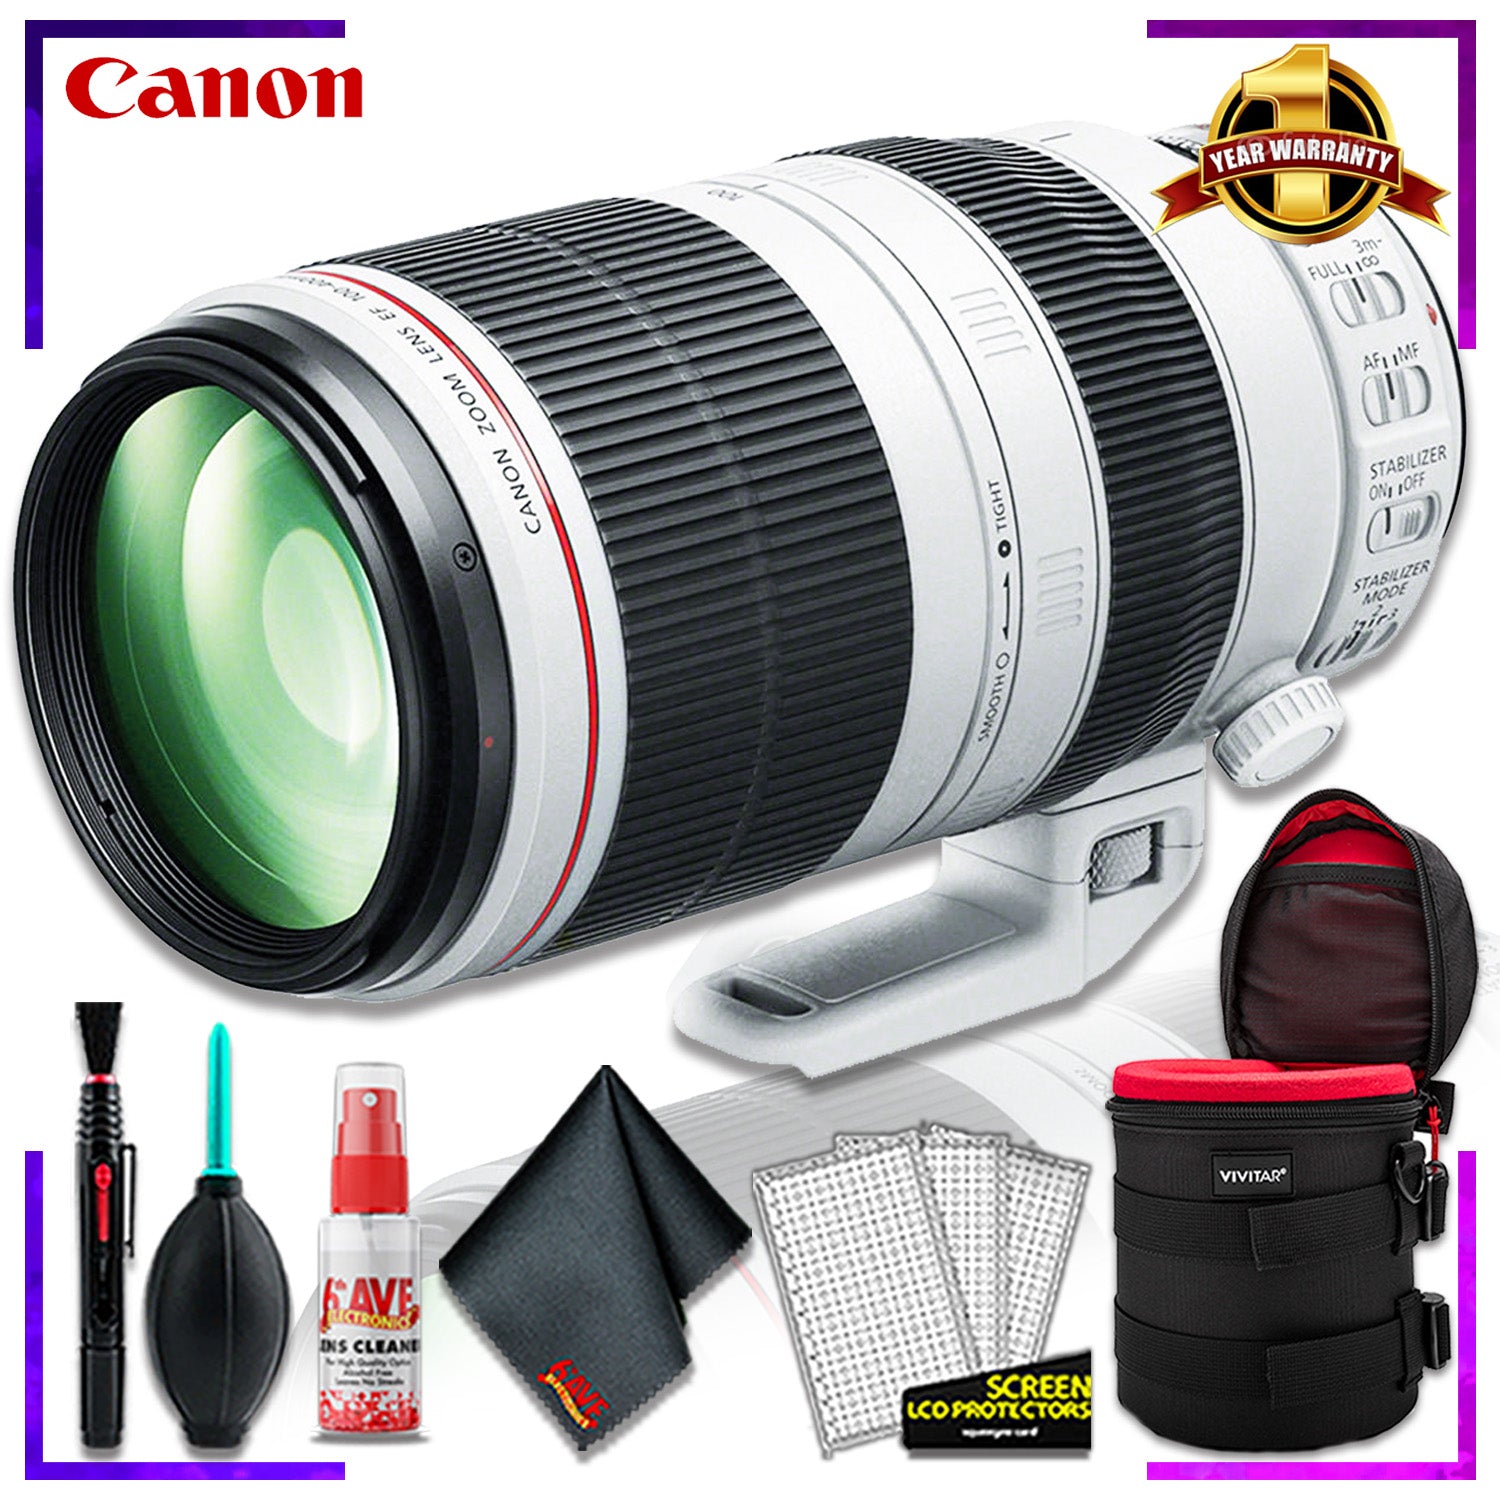 Canon EF 100-400mm F/10-5.6L IS Lens (Intl Model) + 10 inch Vivitar Premium Lens Case + Cleaning Kit